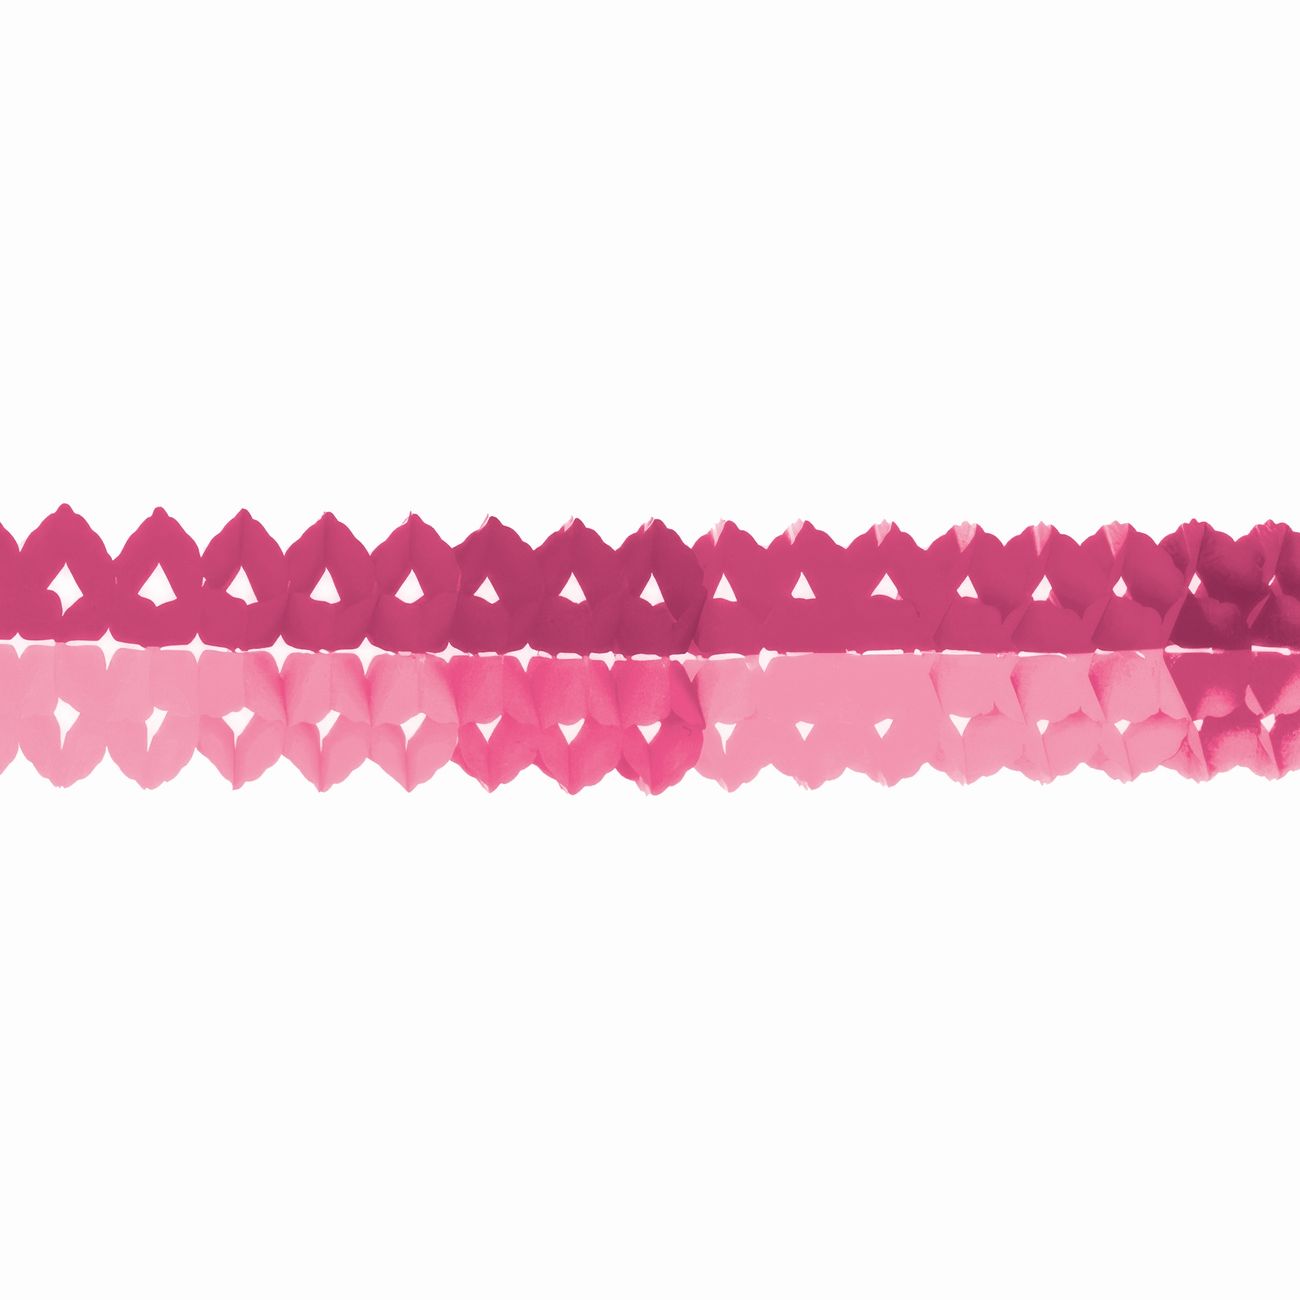 pappersgirlanger-rosa-mini-s-95297-1